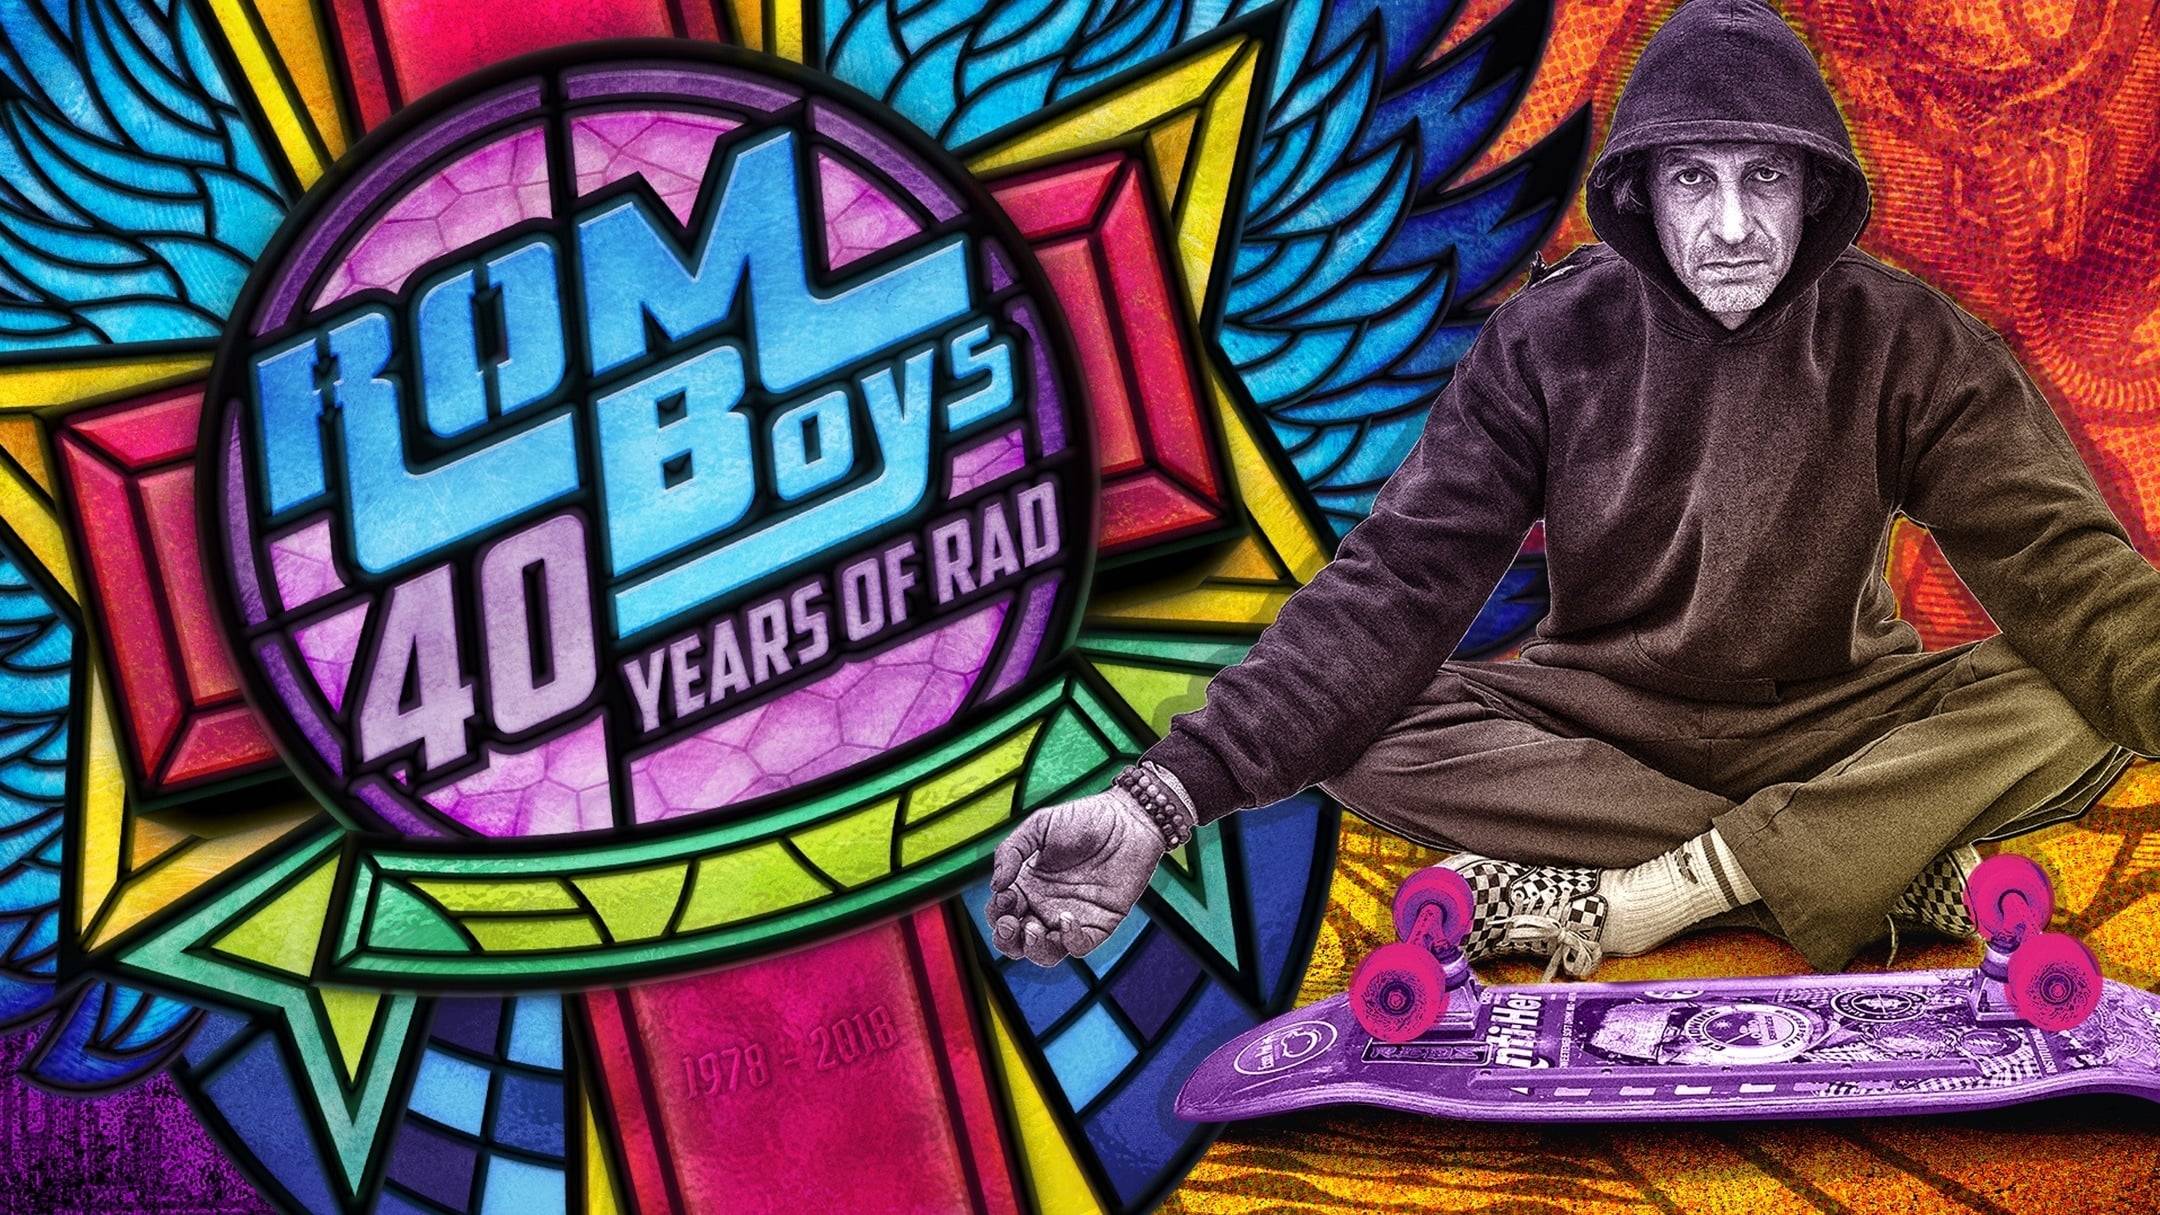 Cubierta de Rom Boys: 40 Years of Rad